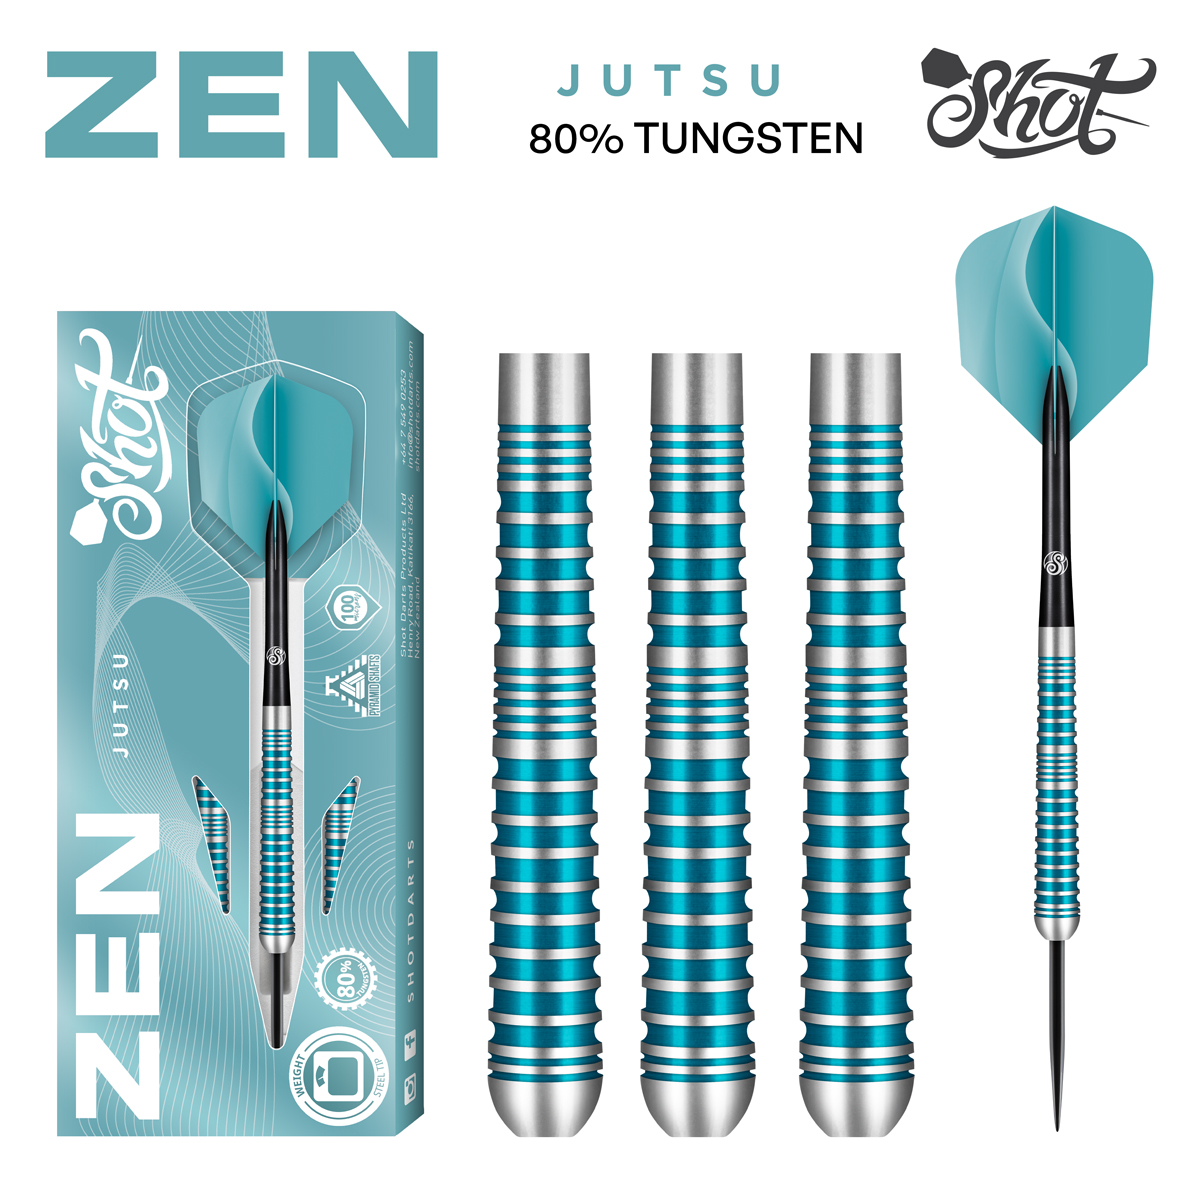 Zen Jutsu 2.0 Steel Tip Dart Set - 80% Tungsten Barrels 